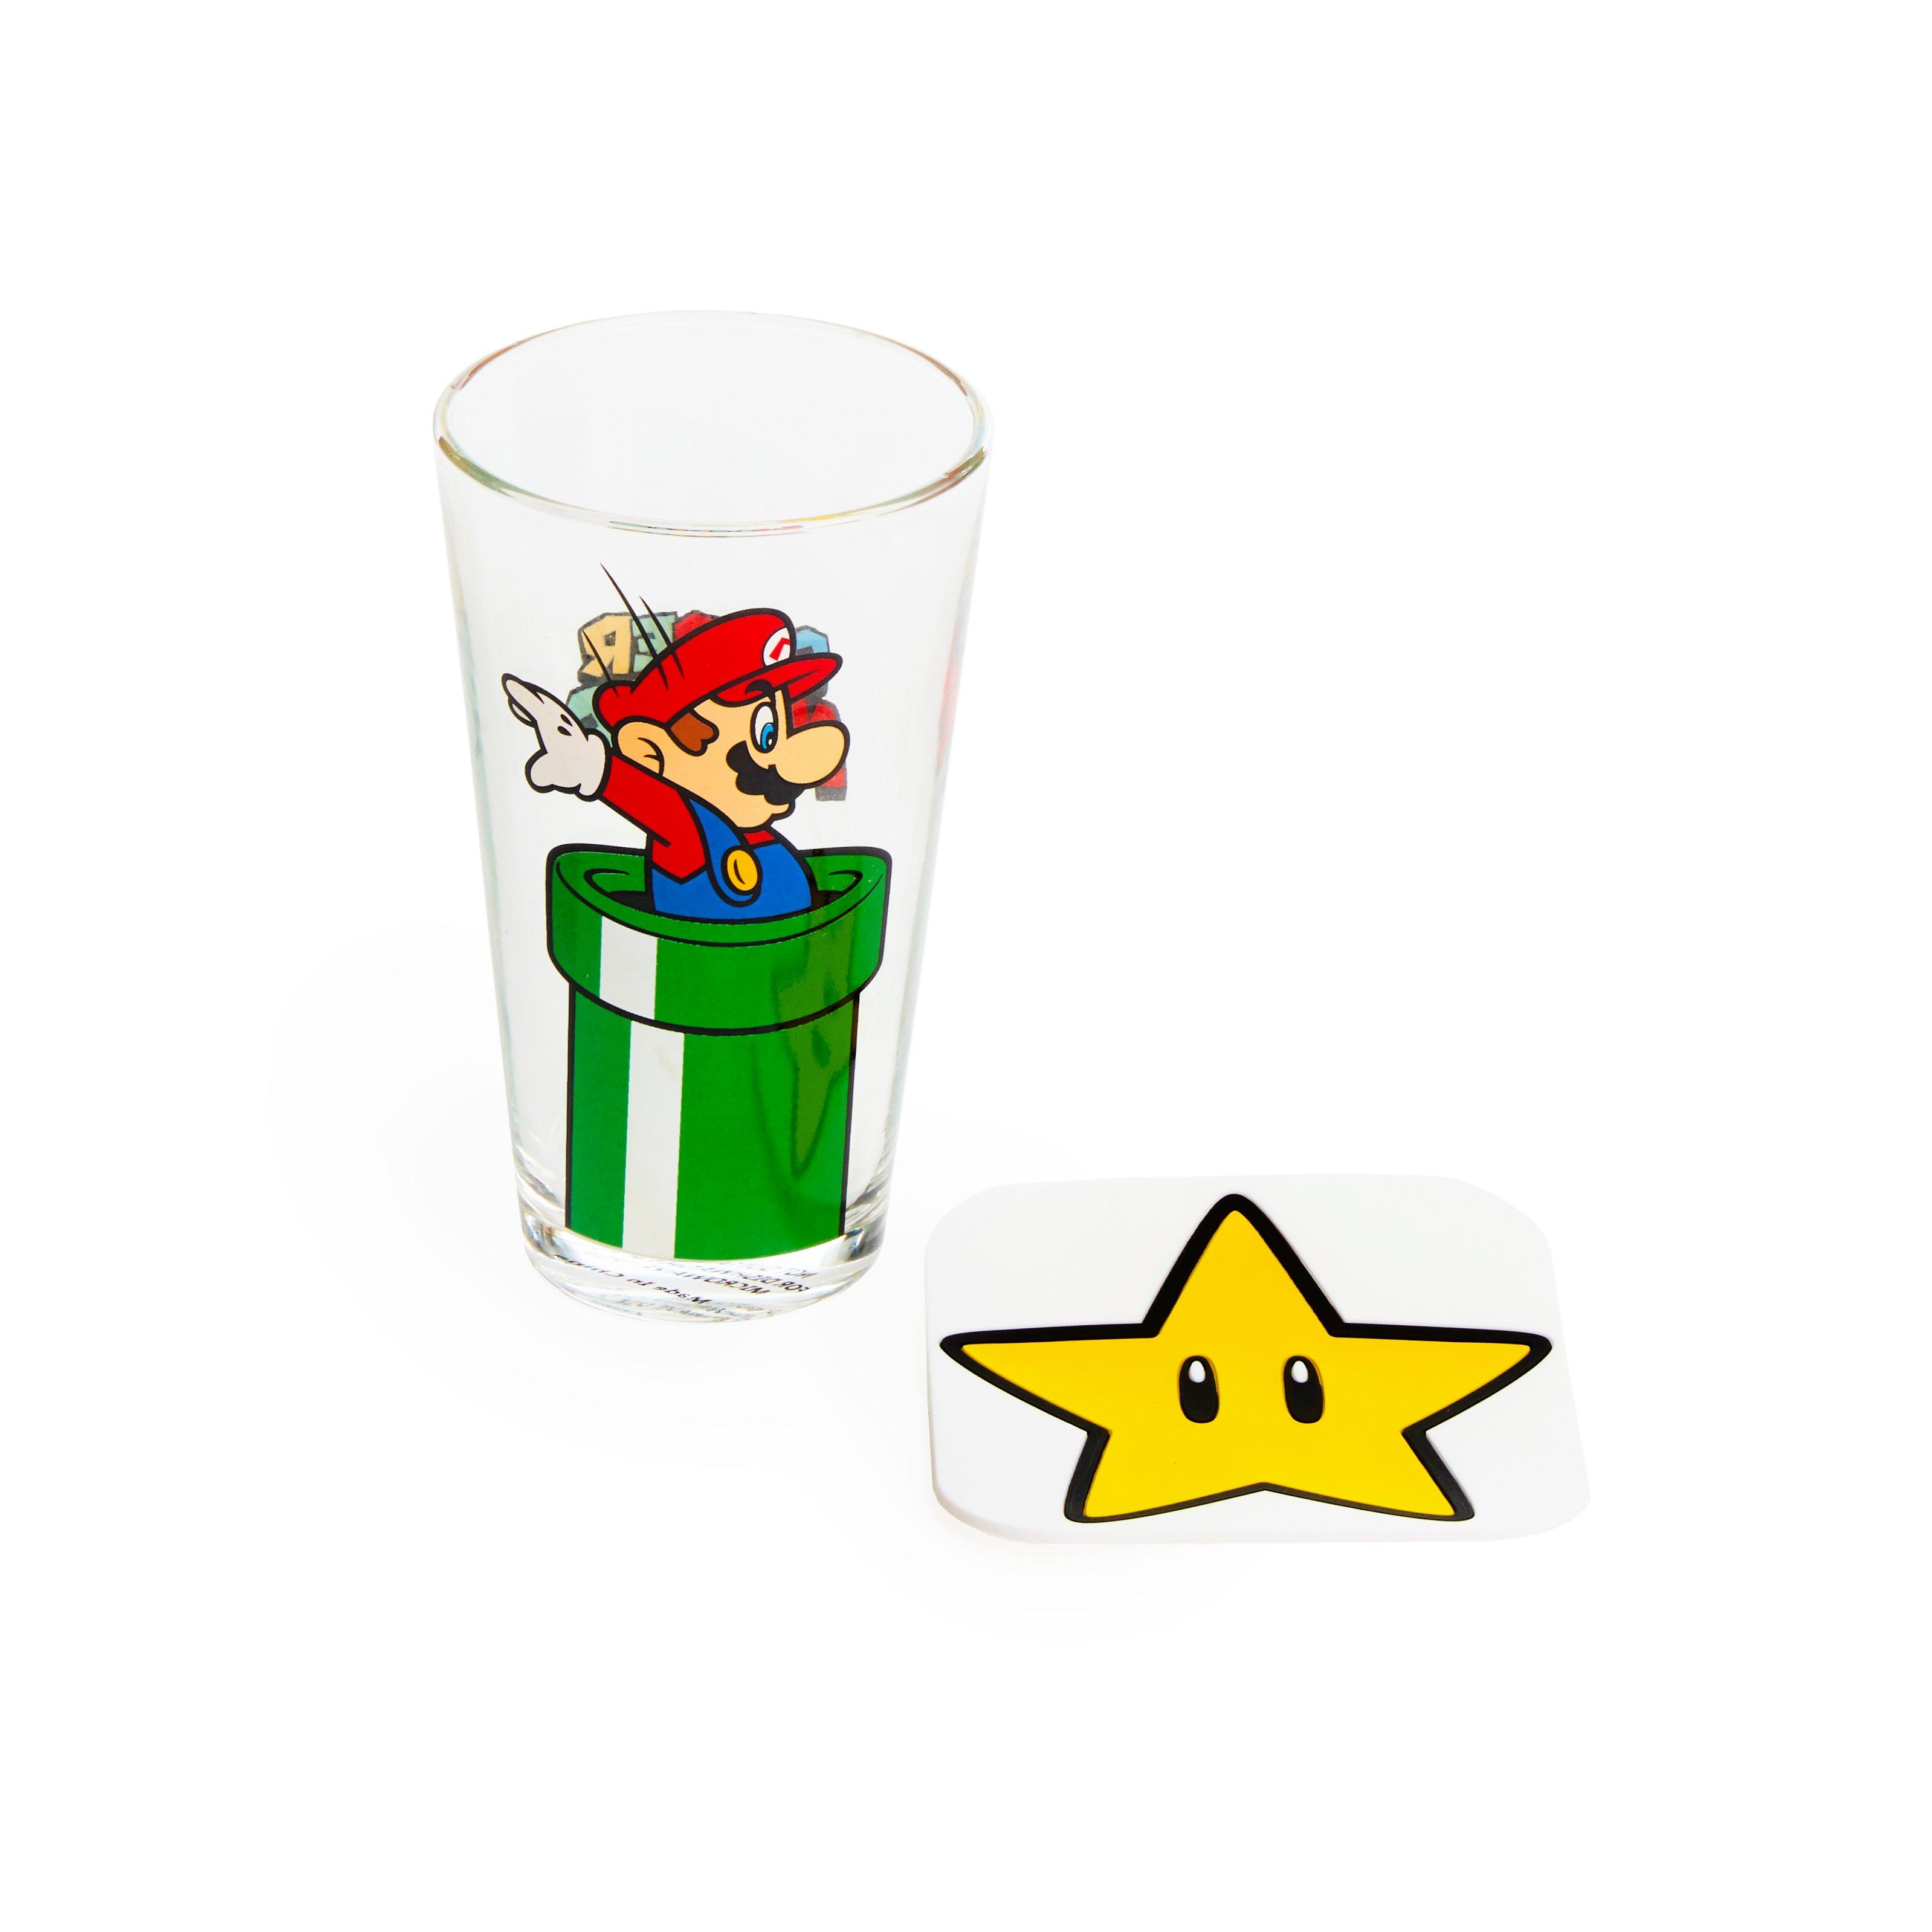 Geeknet Nintendo Super Mario Action Drinkware Set GameStop Exclusive